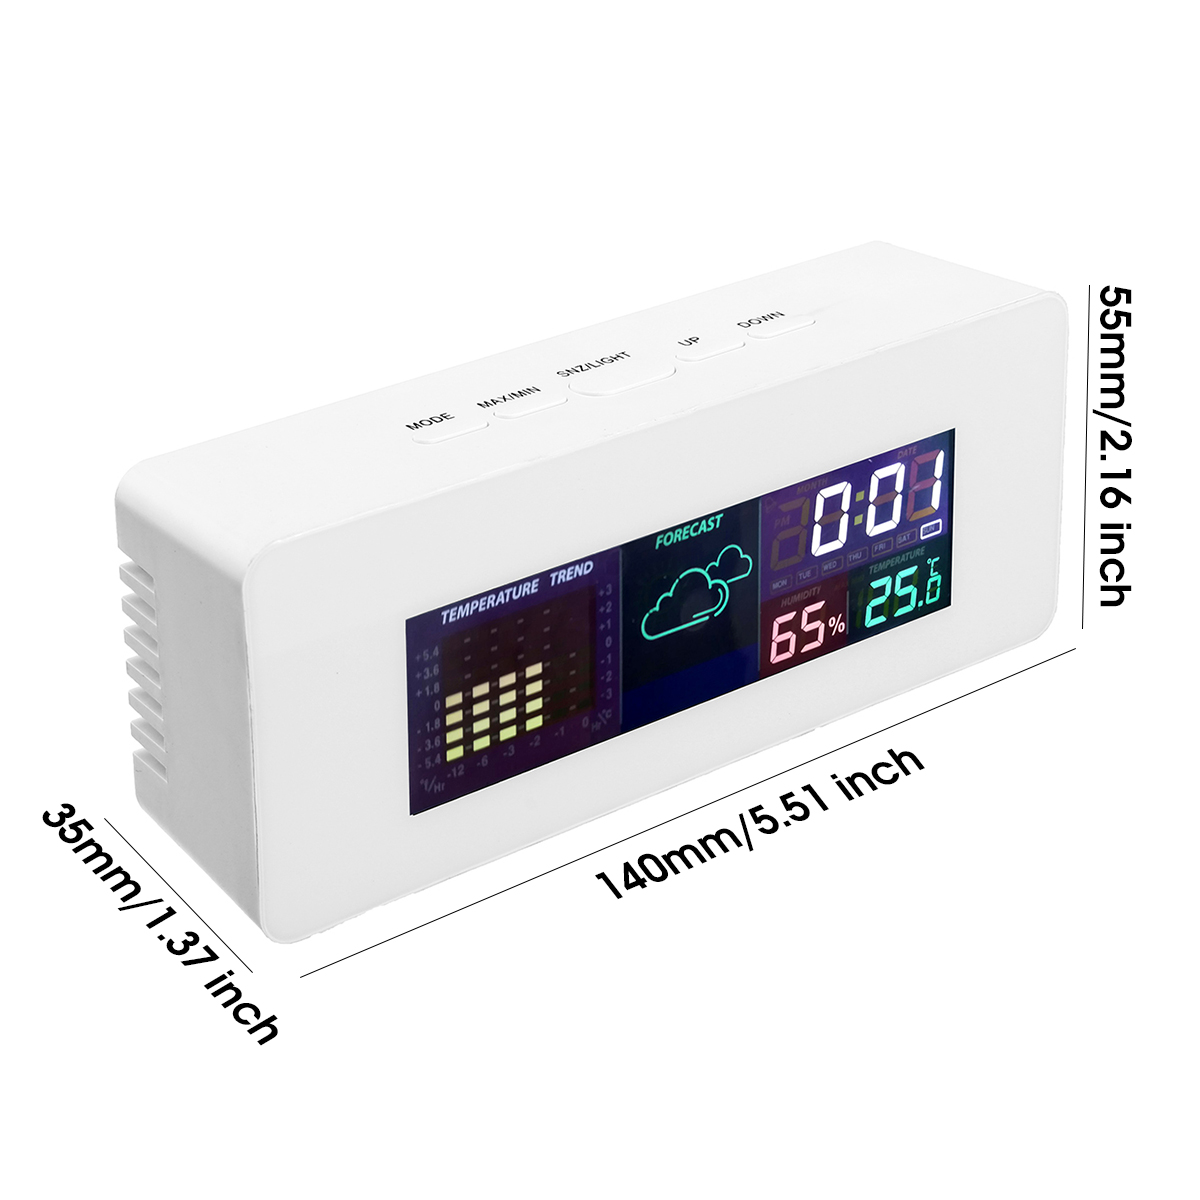 Multi-function-Color-Screen-Temperature-Humidity-Meter-Hygrometer-Monitor-Clock-with-Calendar-Alarm--1520038-9